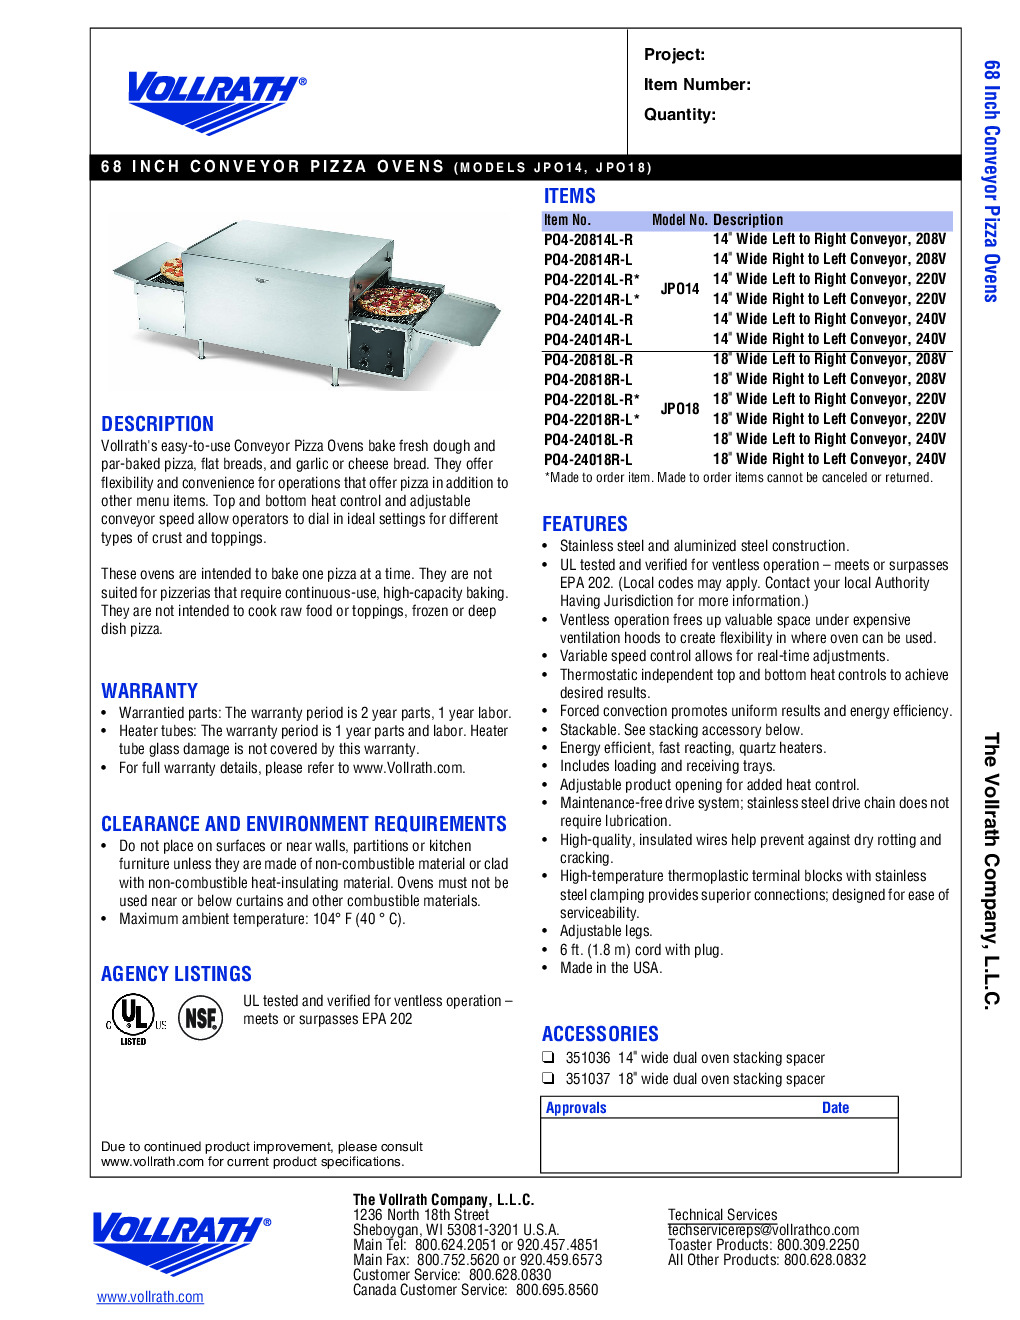 Vollrath PO4-22014R-L Countertop Electric Conveyor Oven, (1) 14